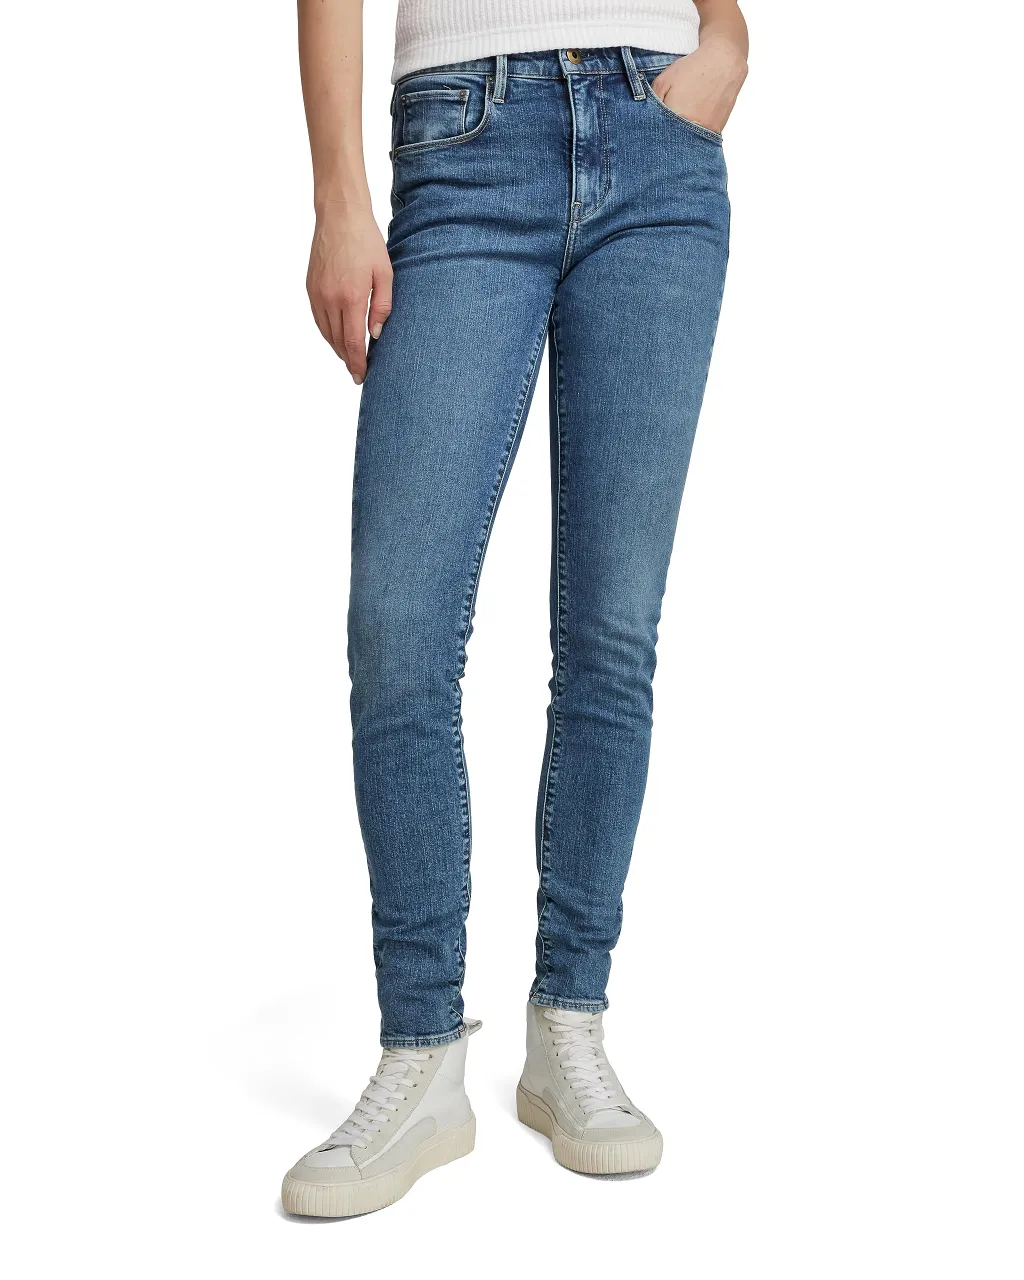 G-STAR RAW Damen 3301 High Skinny Jeans